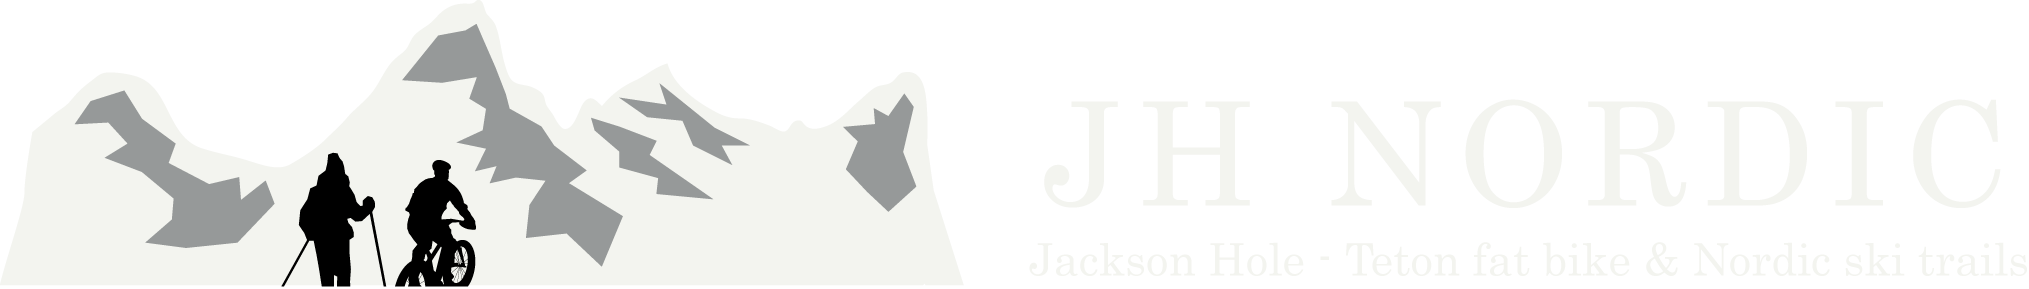 JHNordic logo